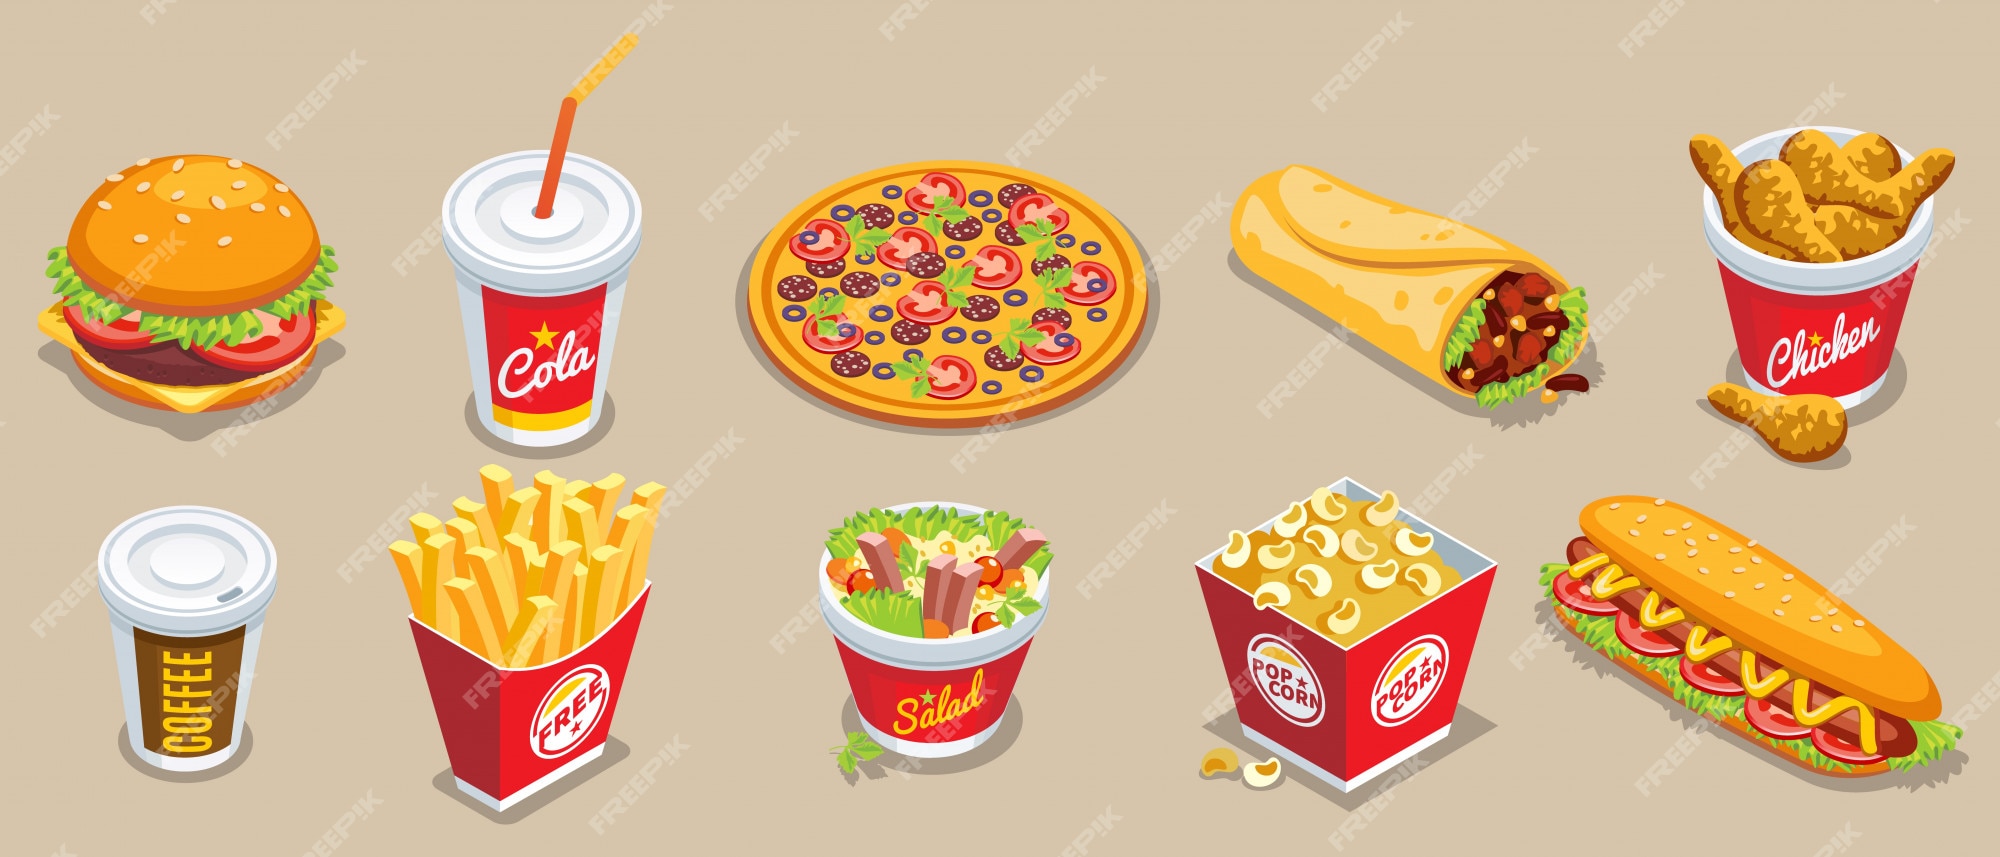 Burger fast food Vectors & Illustrations for Free Download | Freepik